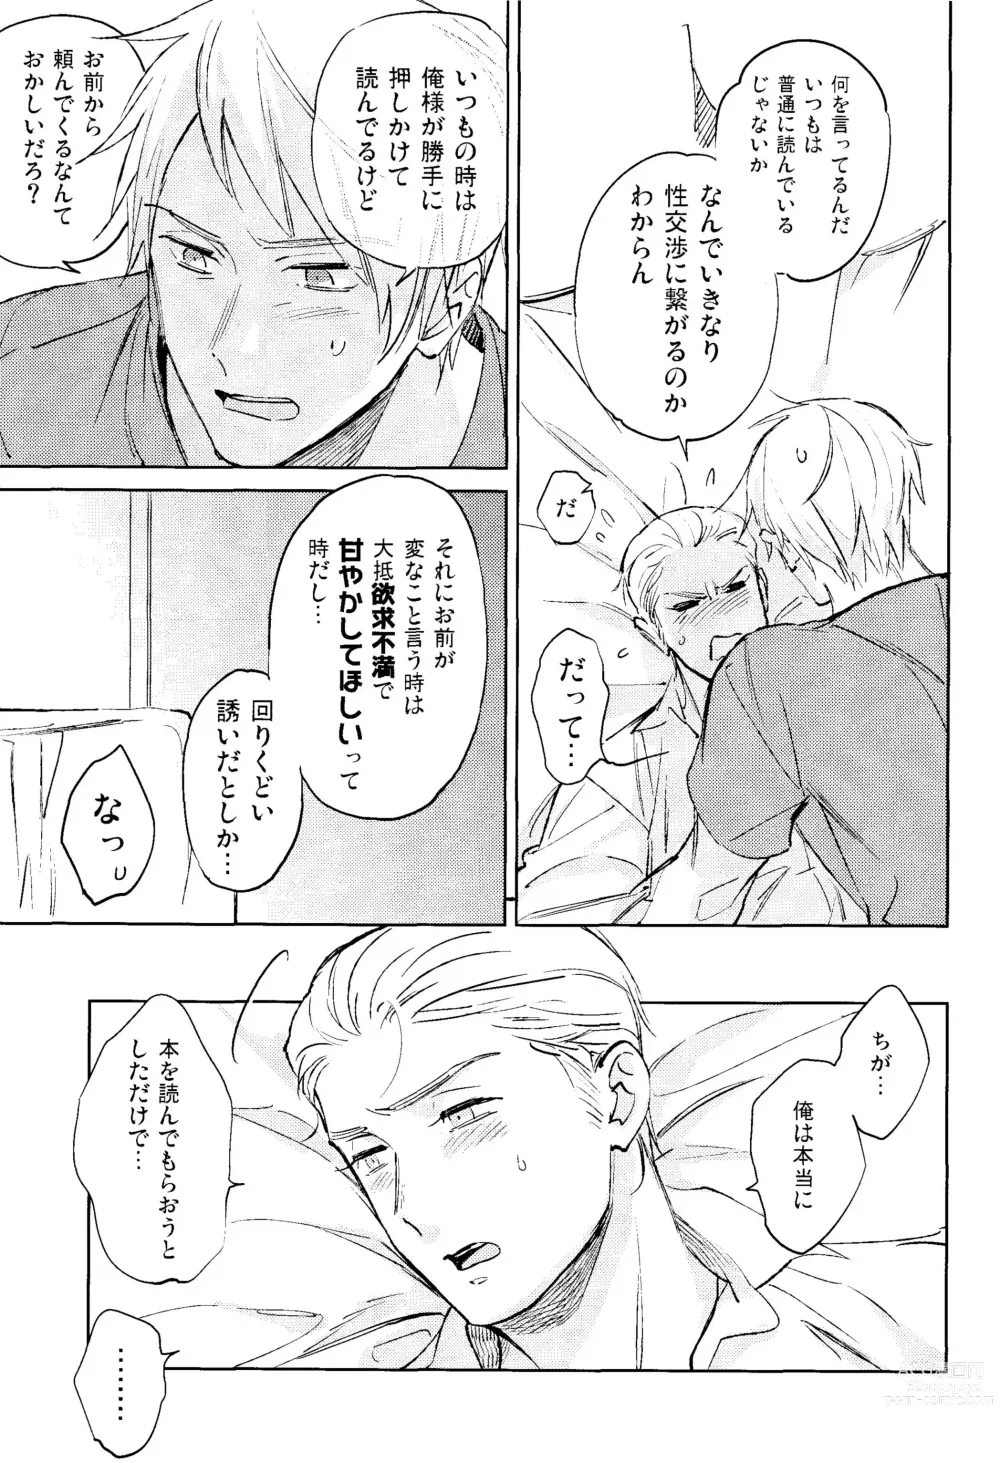 Page 11 of doujinshi Toge